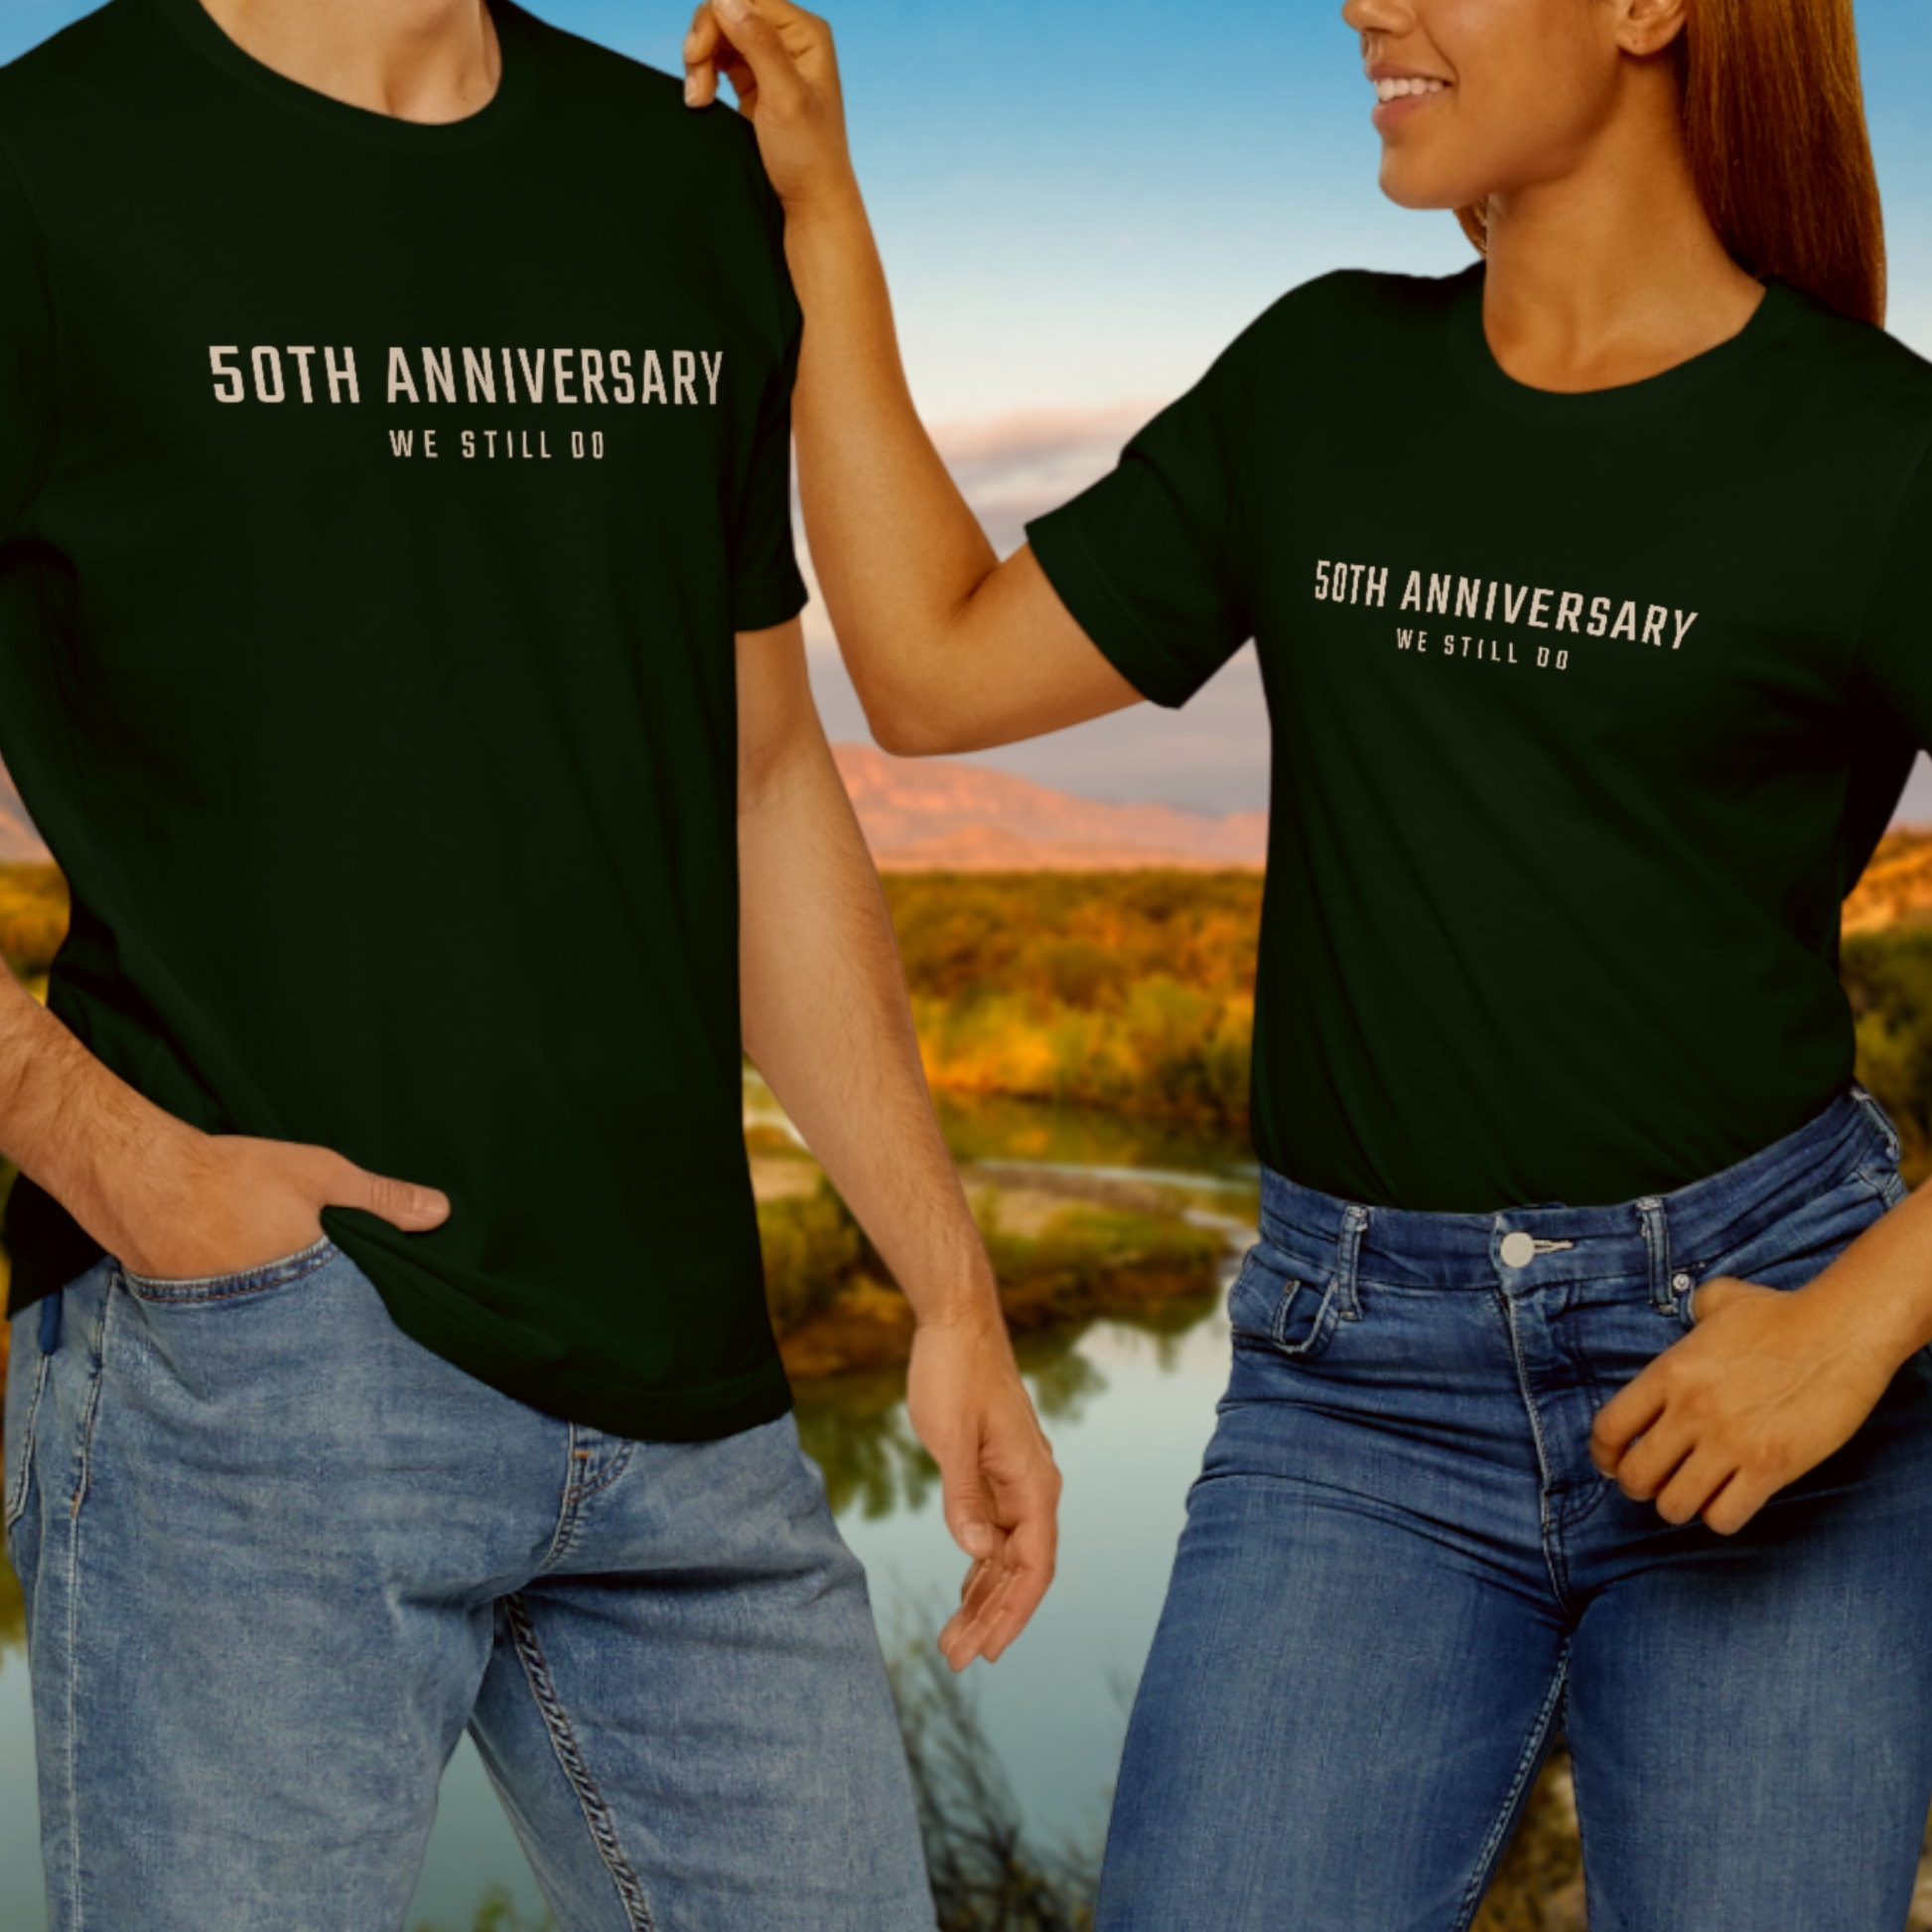 couple shirt design for anniversary